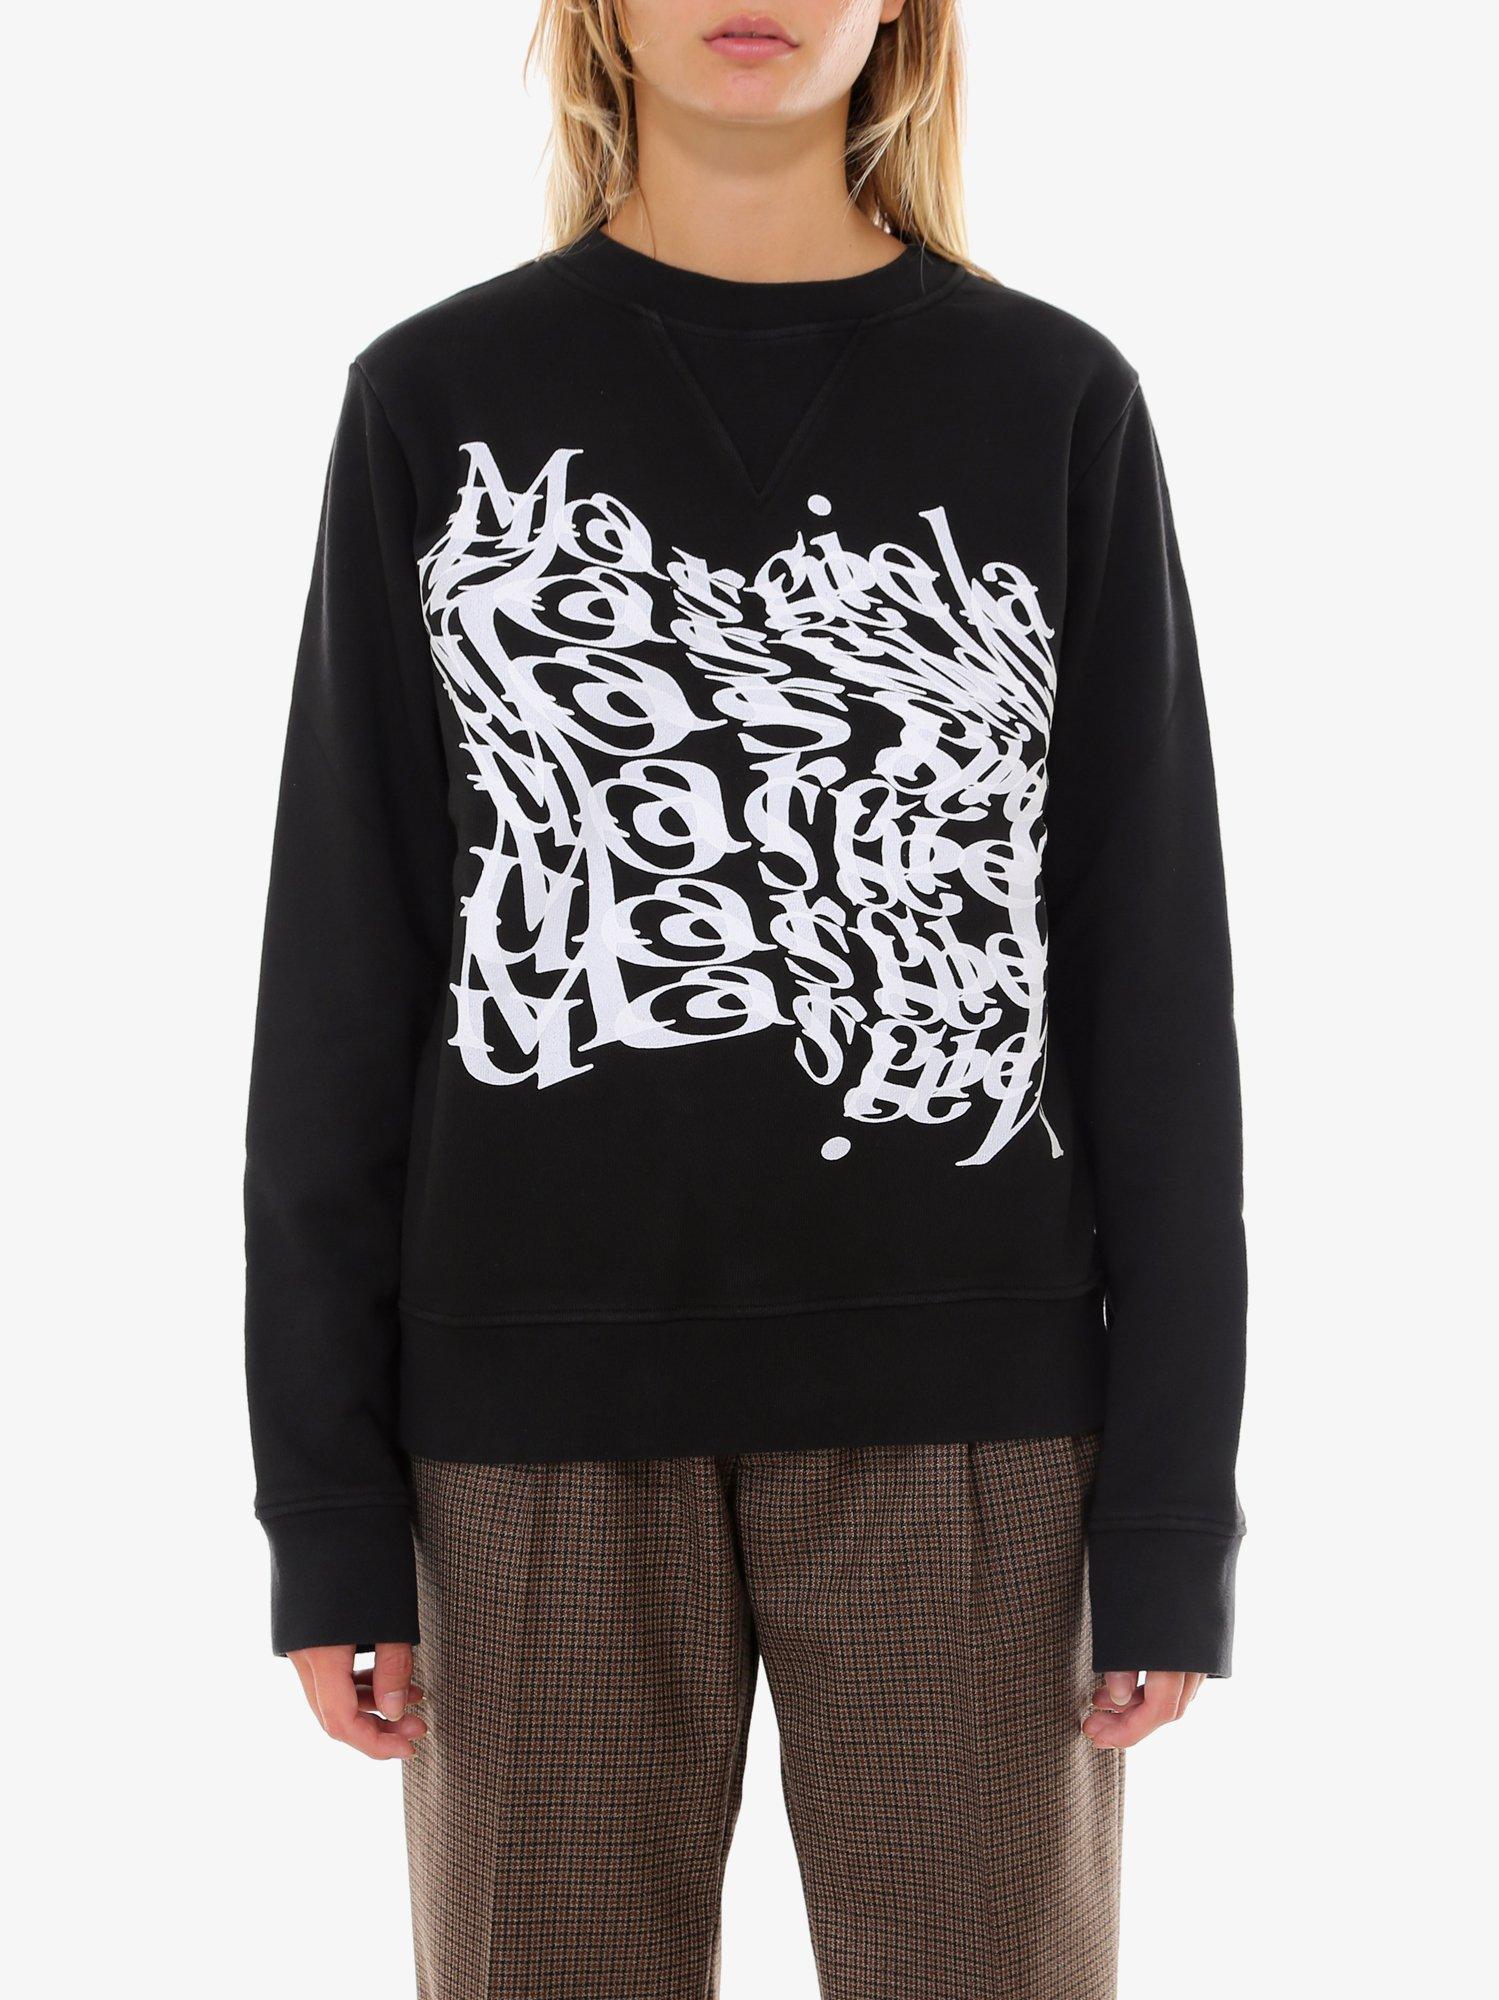 Maison Margiela Cotton Sweatshirt in Black - Lyst